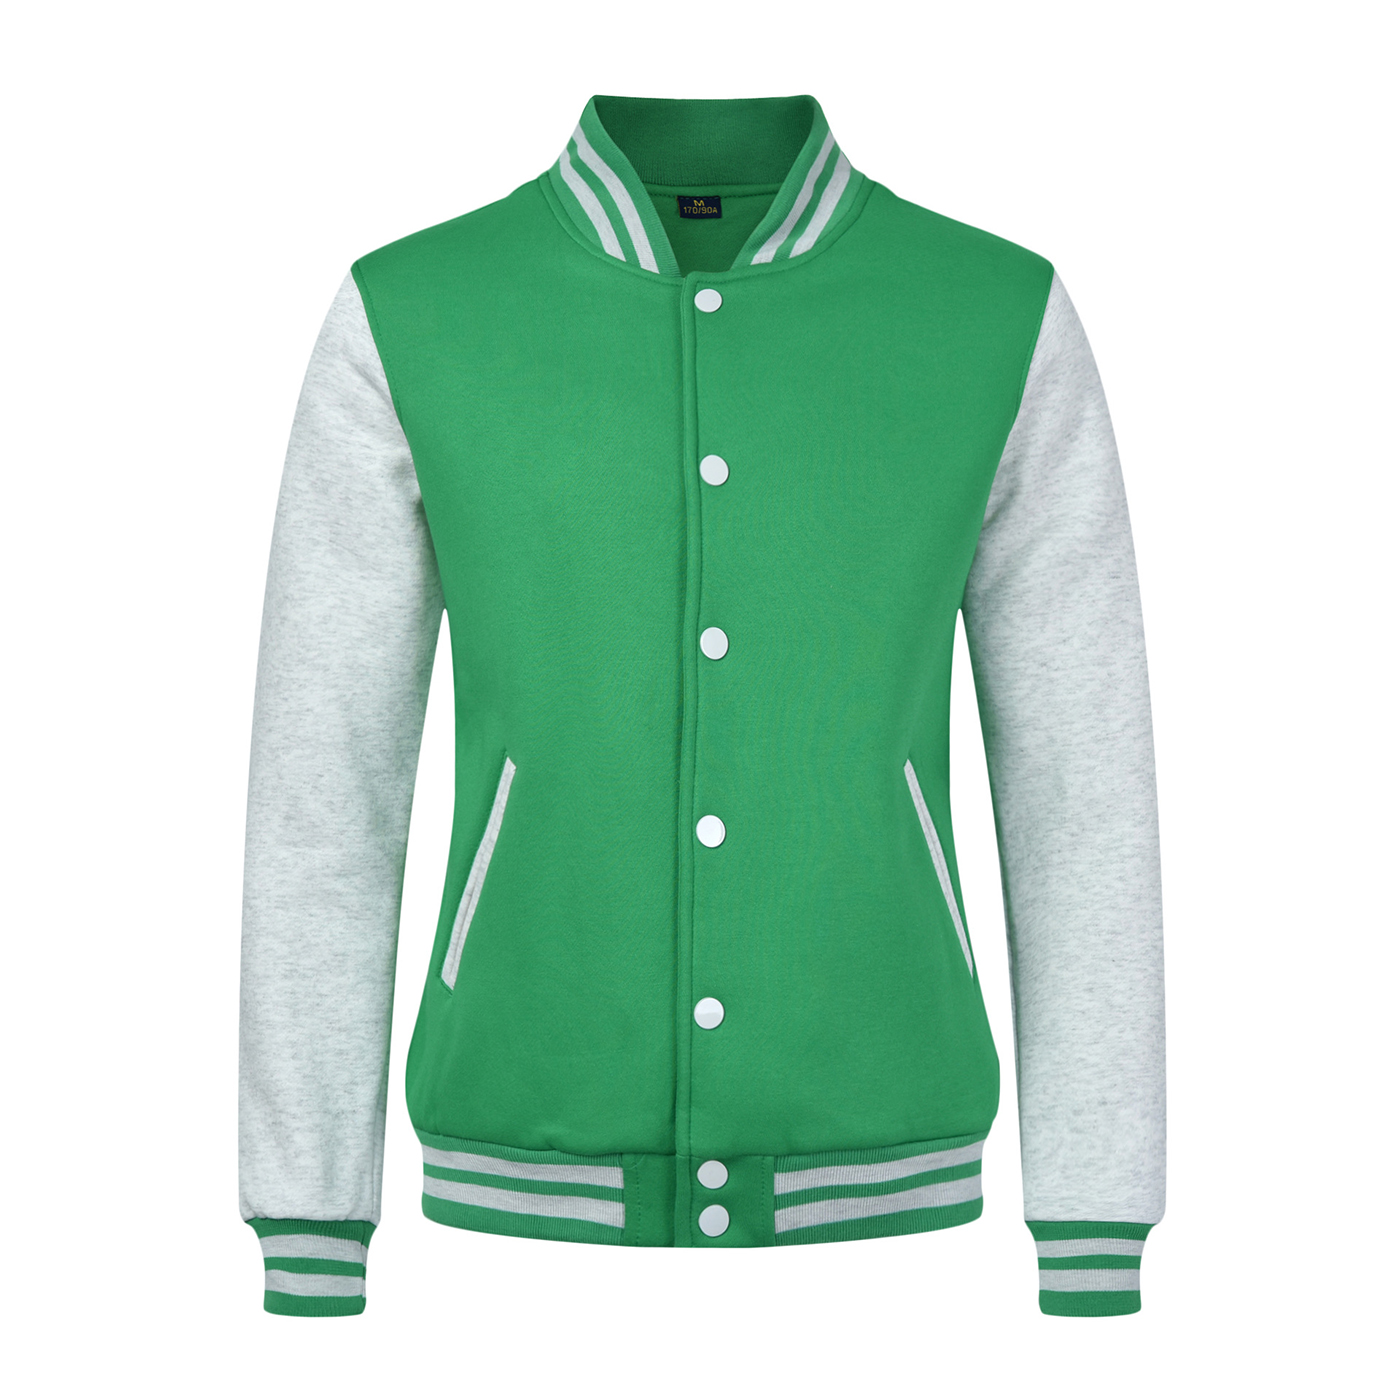 Baseball Uniform Fleece Jacket3